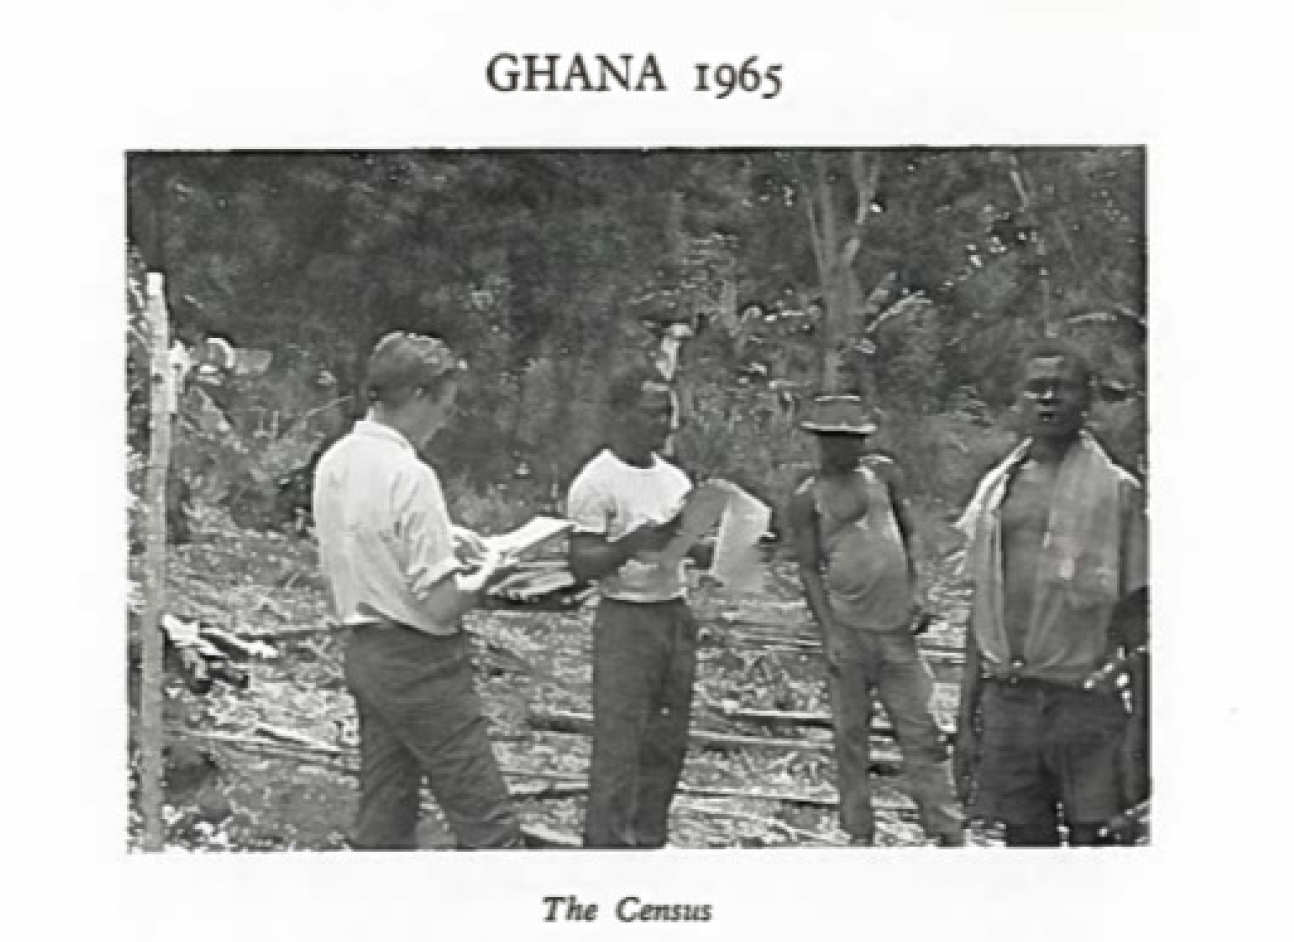 1965 Ghana Expedition